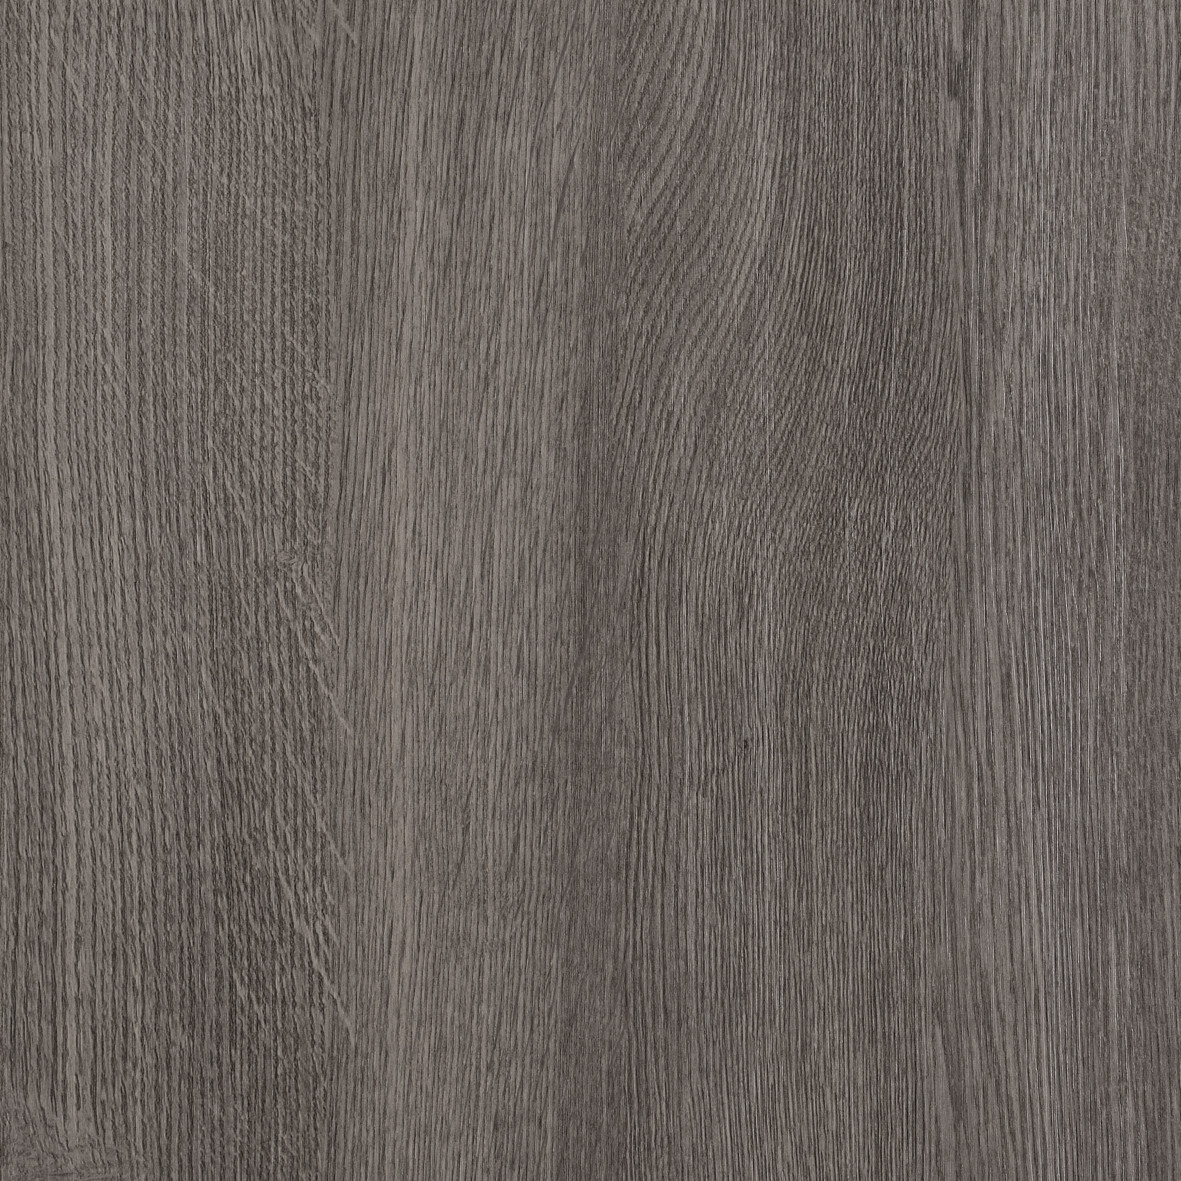 Gerflor PVC DesignTime Oak tmavý 7415 4m tloušťka 2,25mm nášlap 0,70 mm